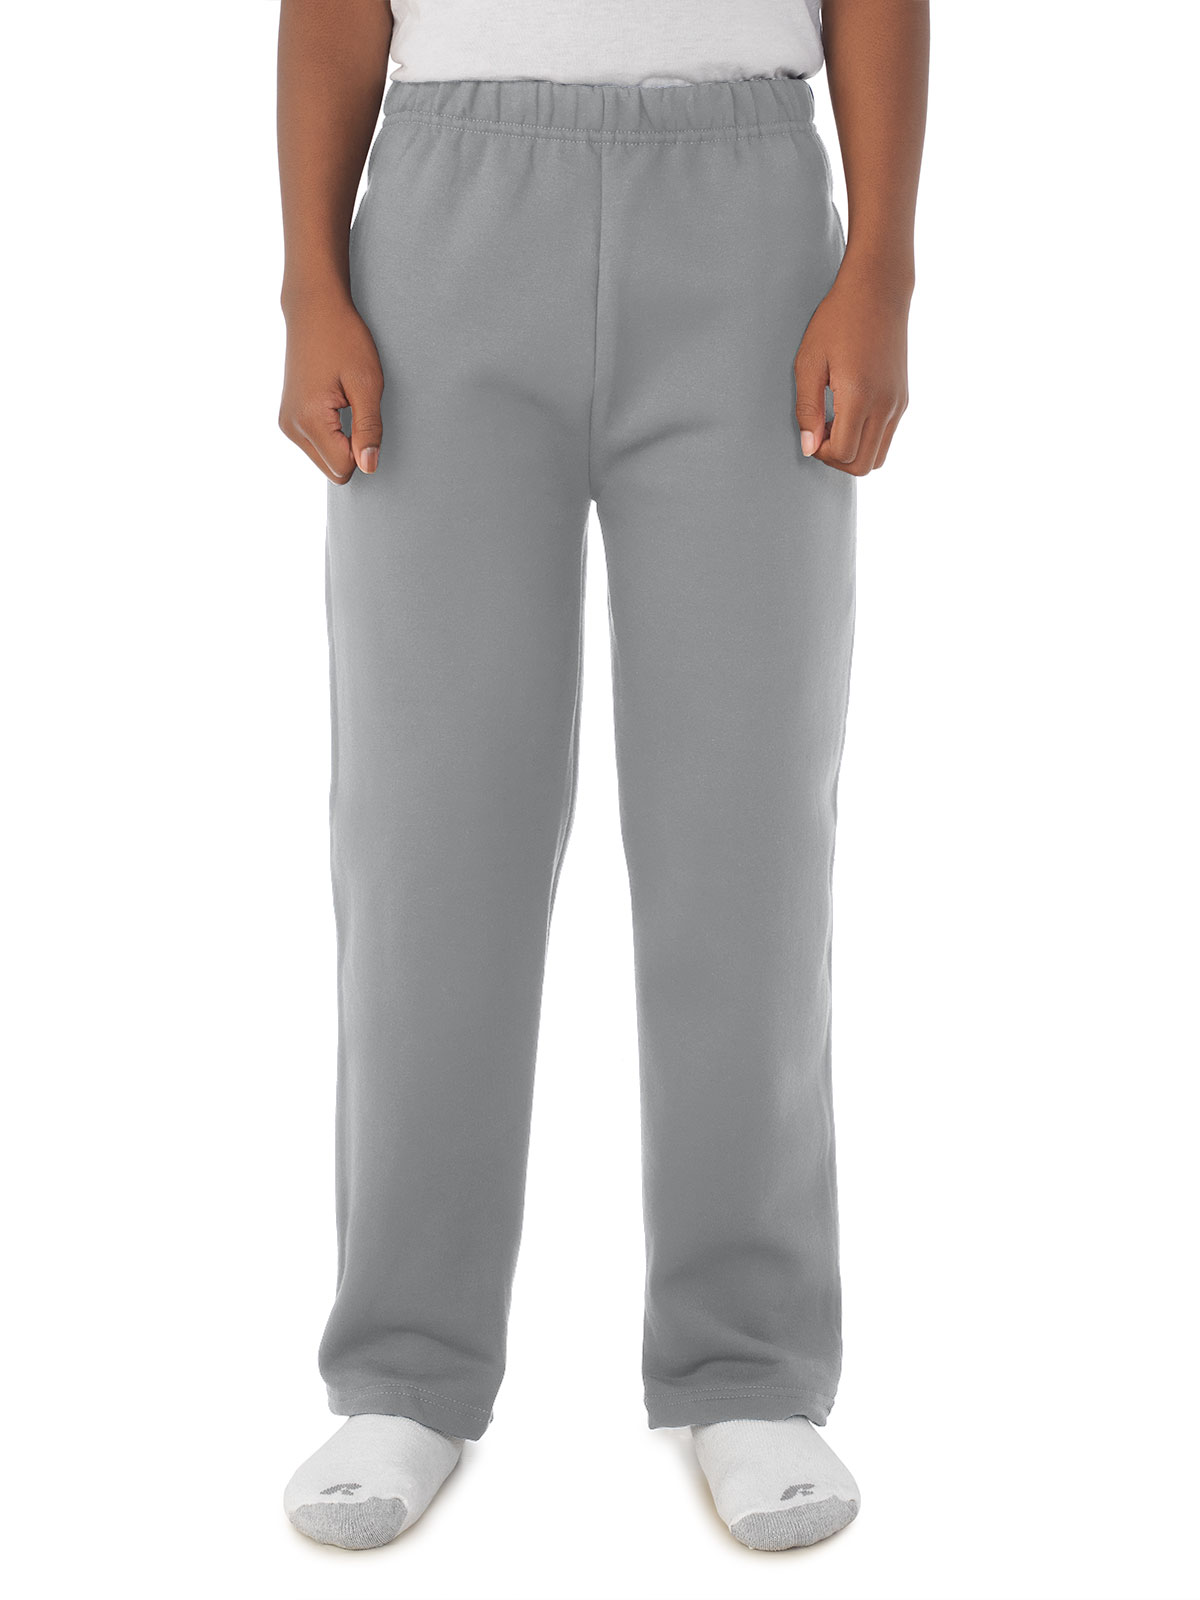 JERZEES® 974YPR NuBlend® Youth Pocketed Open-Bottom Sweatpants